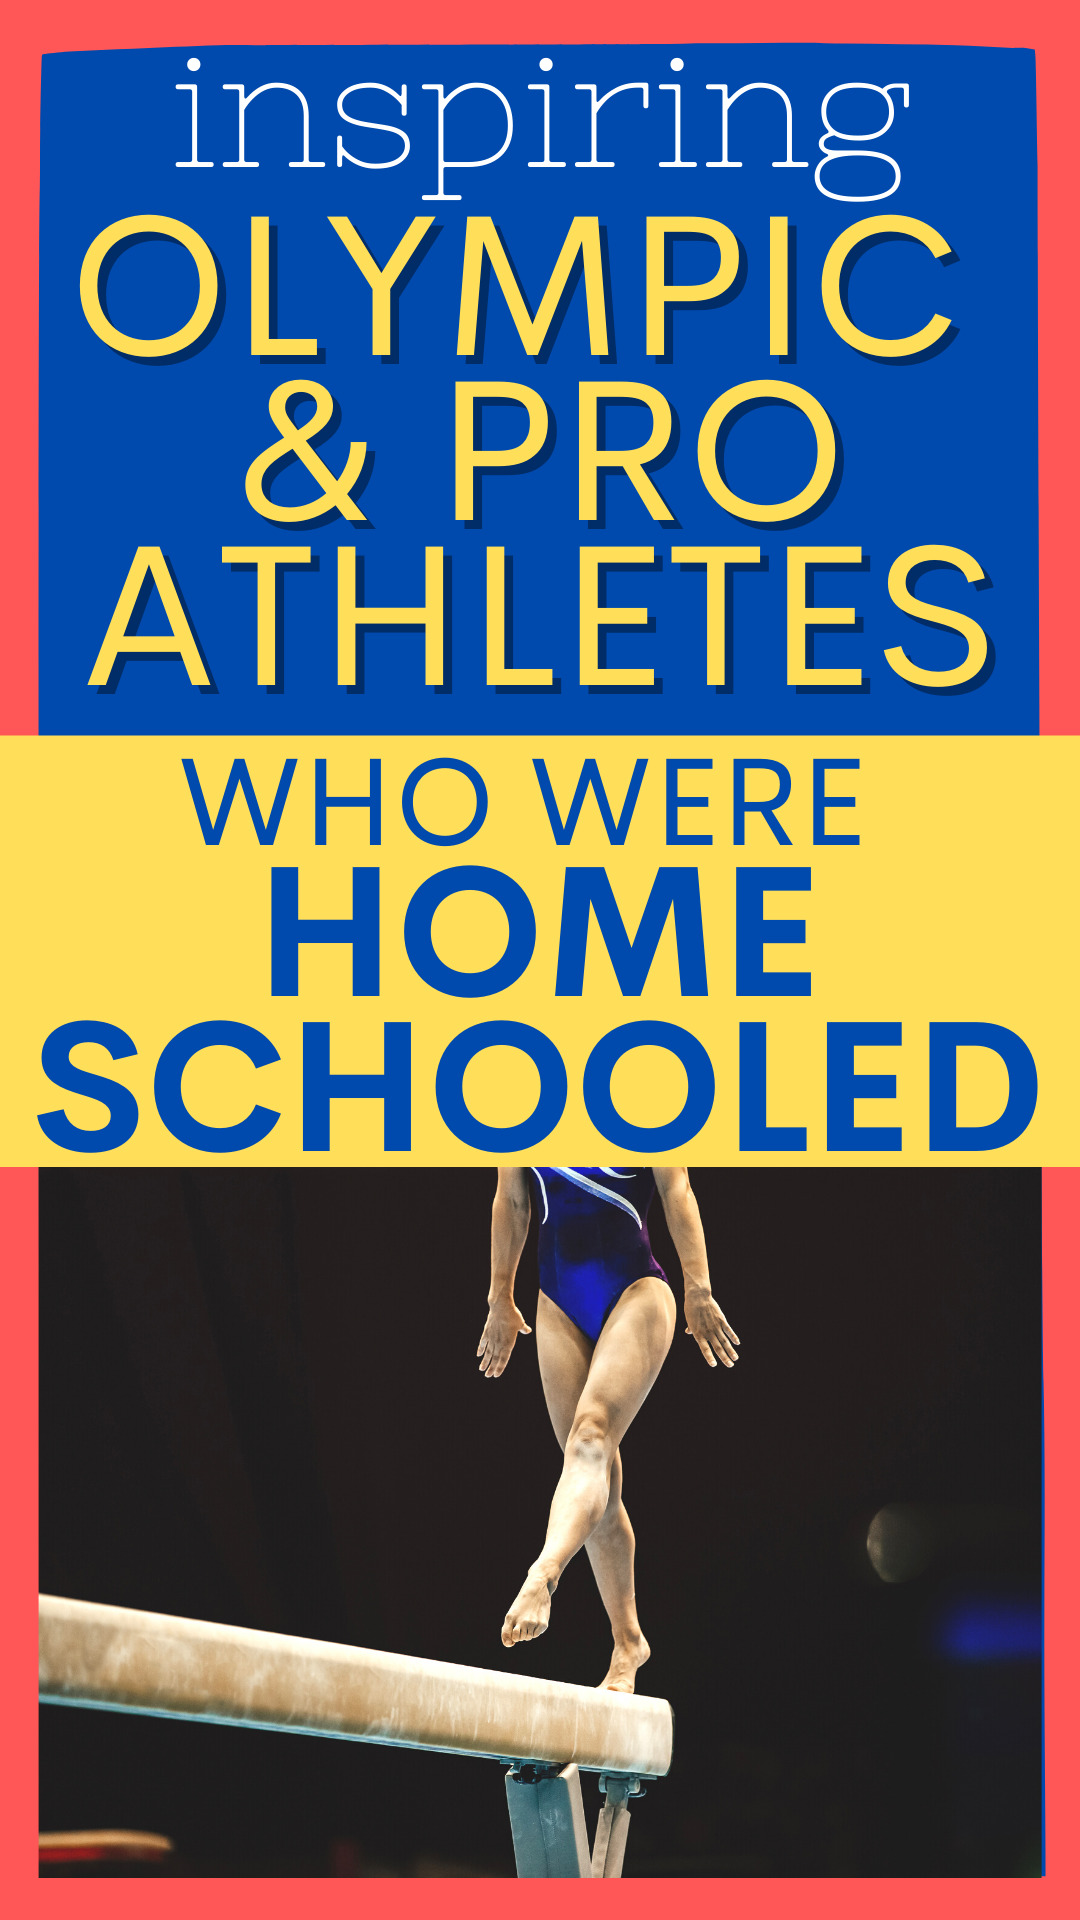 Homeschool and Sports